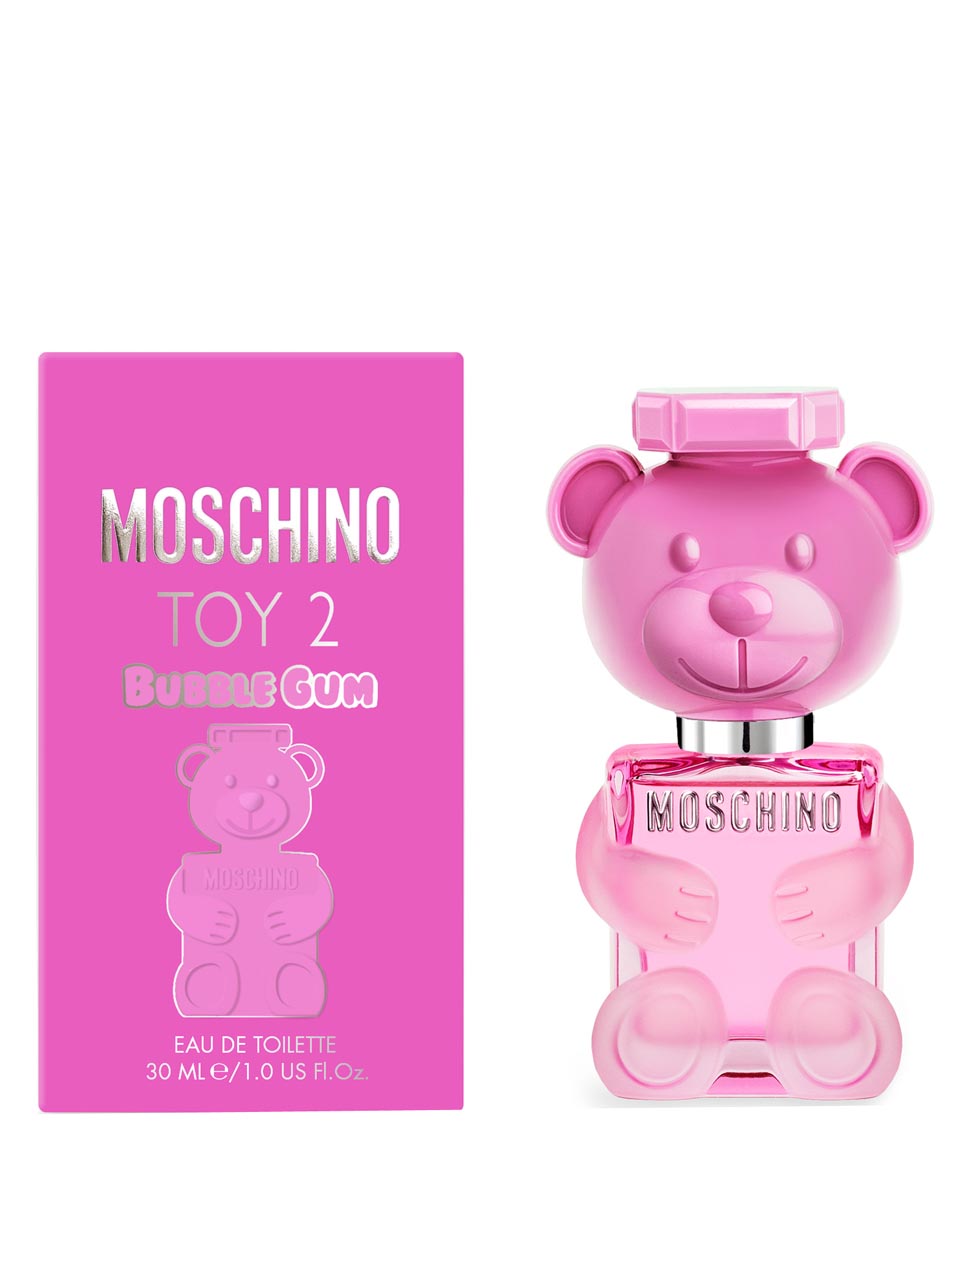 Moschino Toy2 Bubble Gum Eau de Toilette 30 ml null - onesize - 1